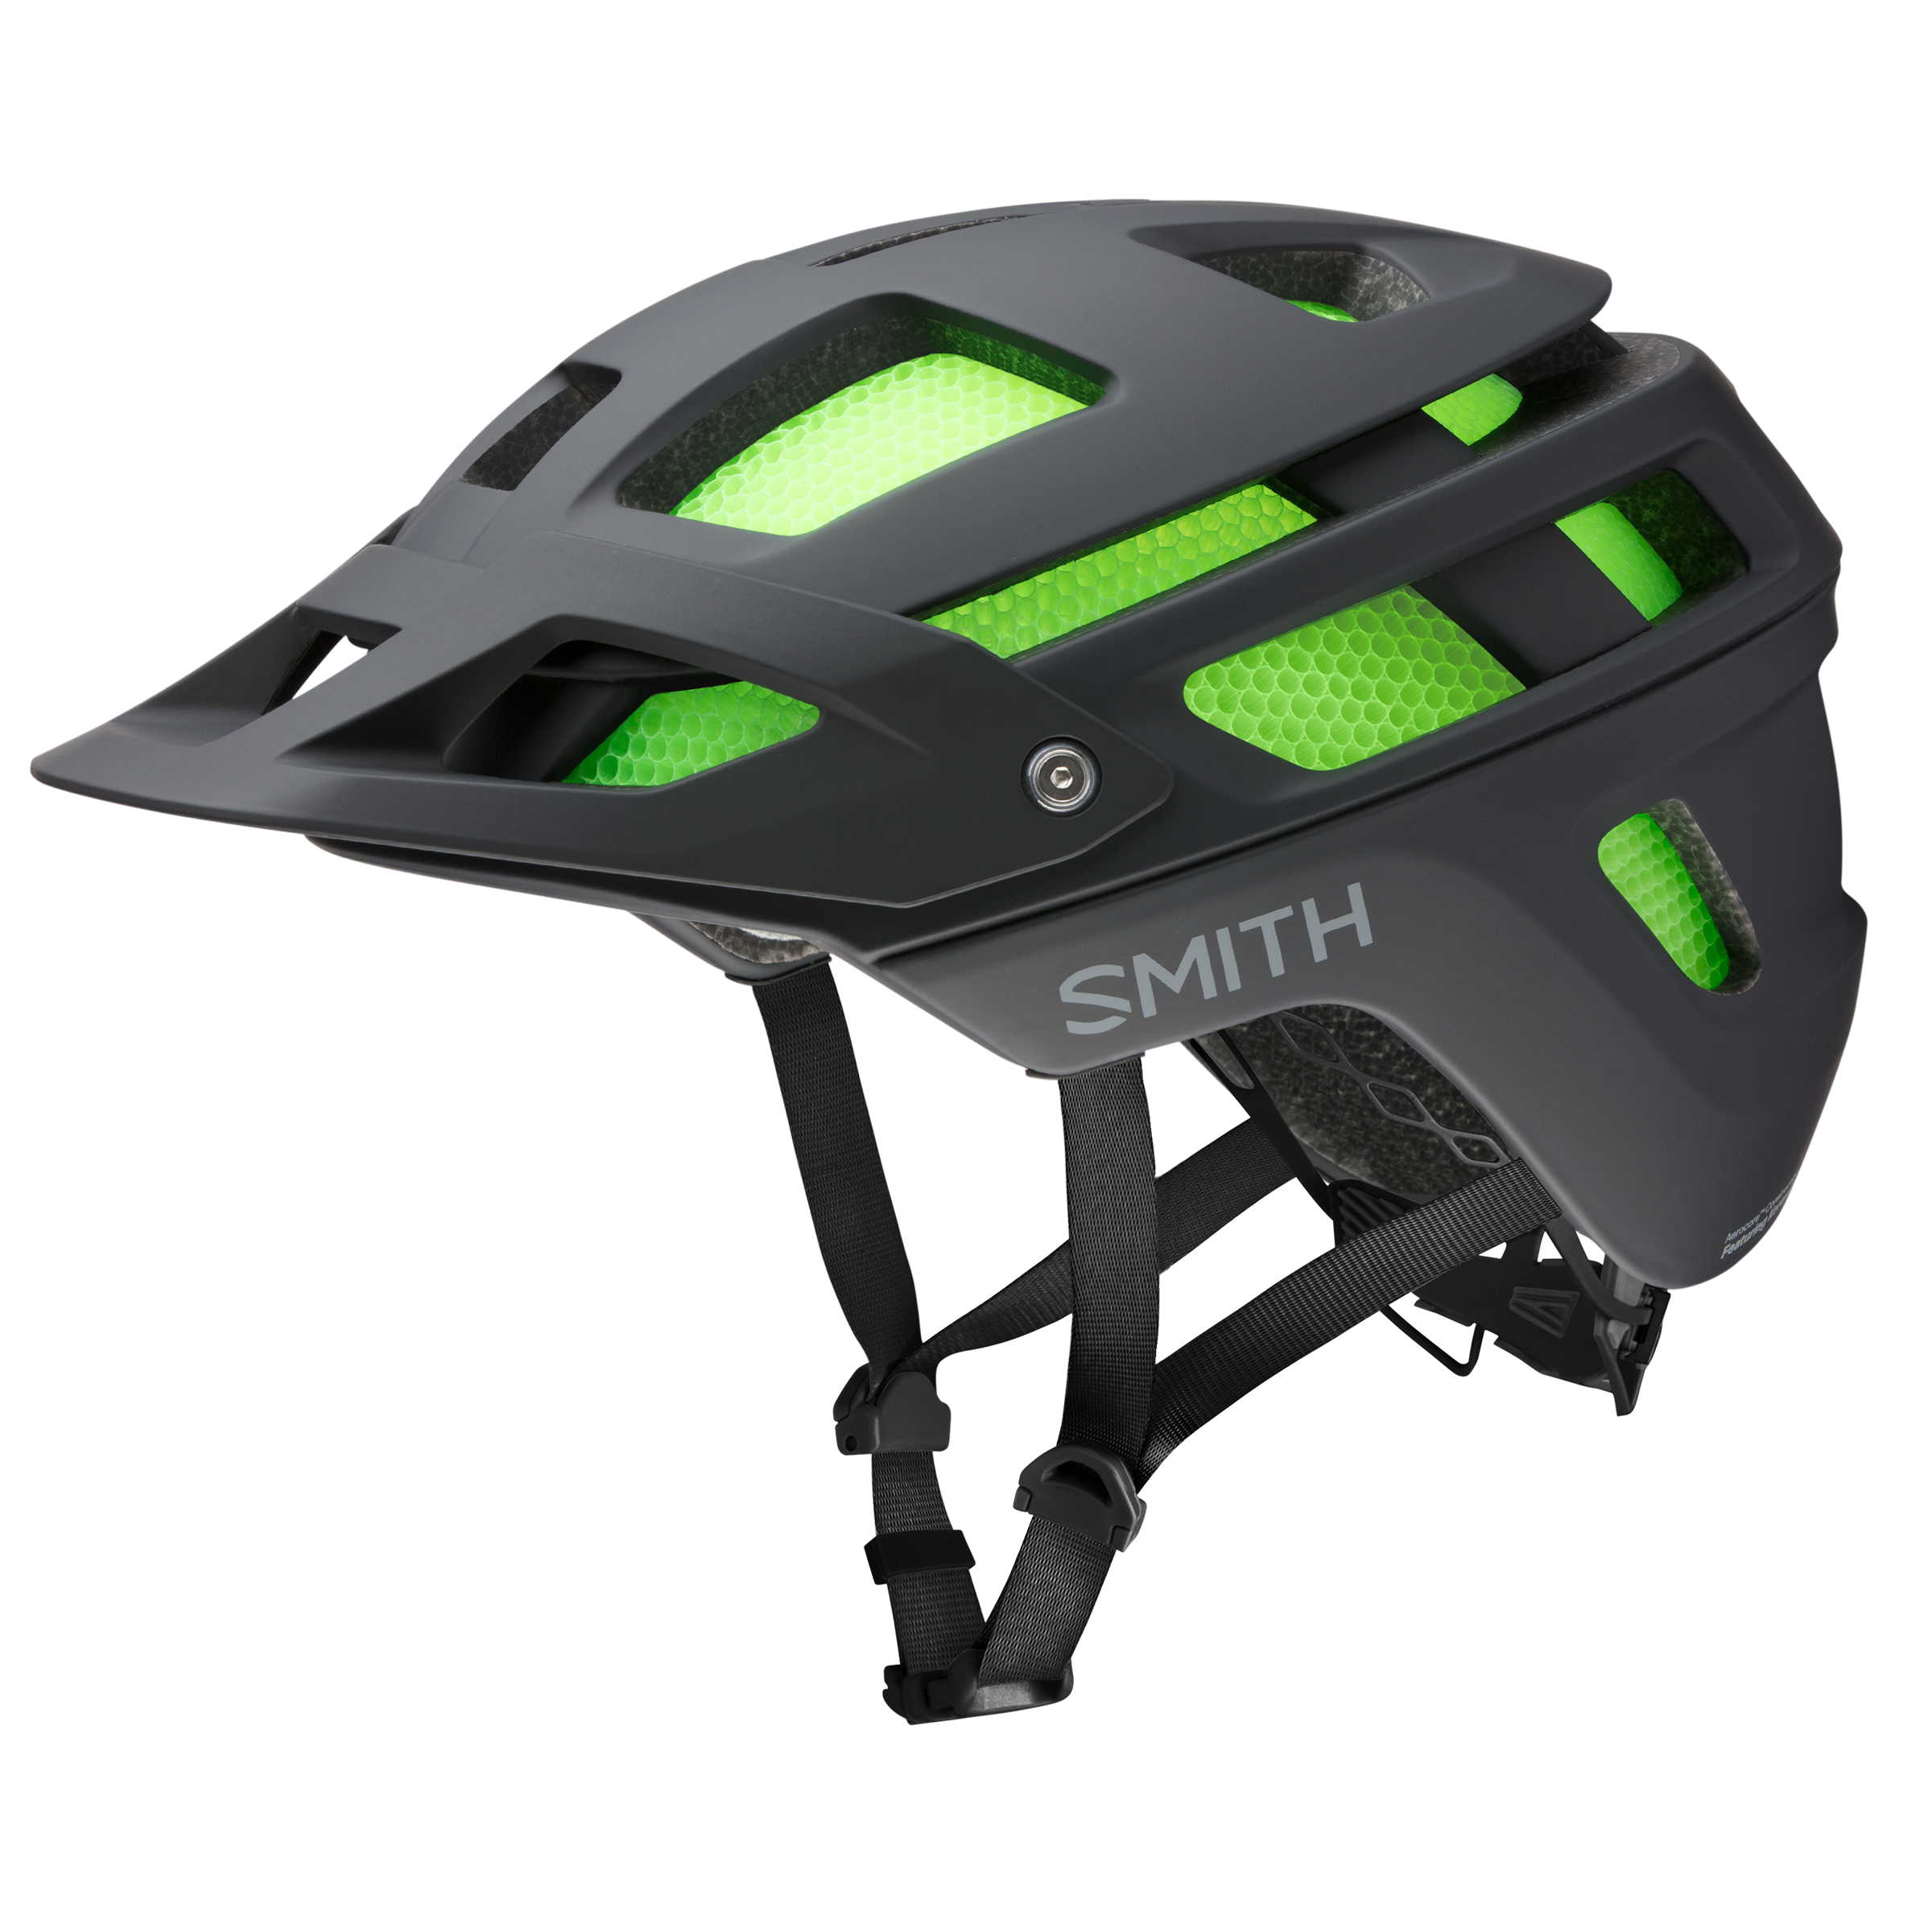 smith mips bike helmet